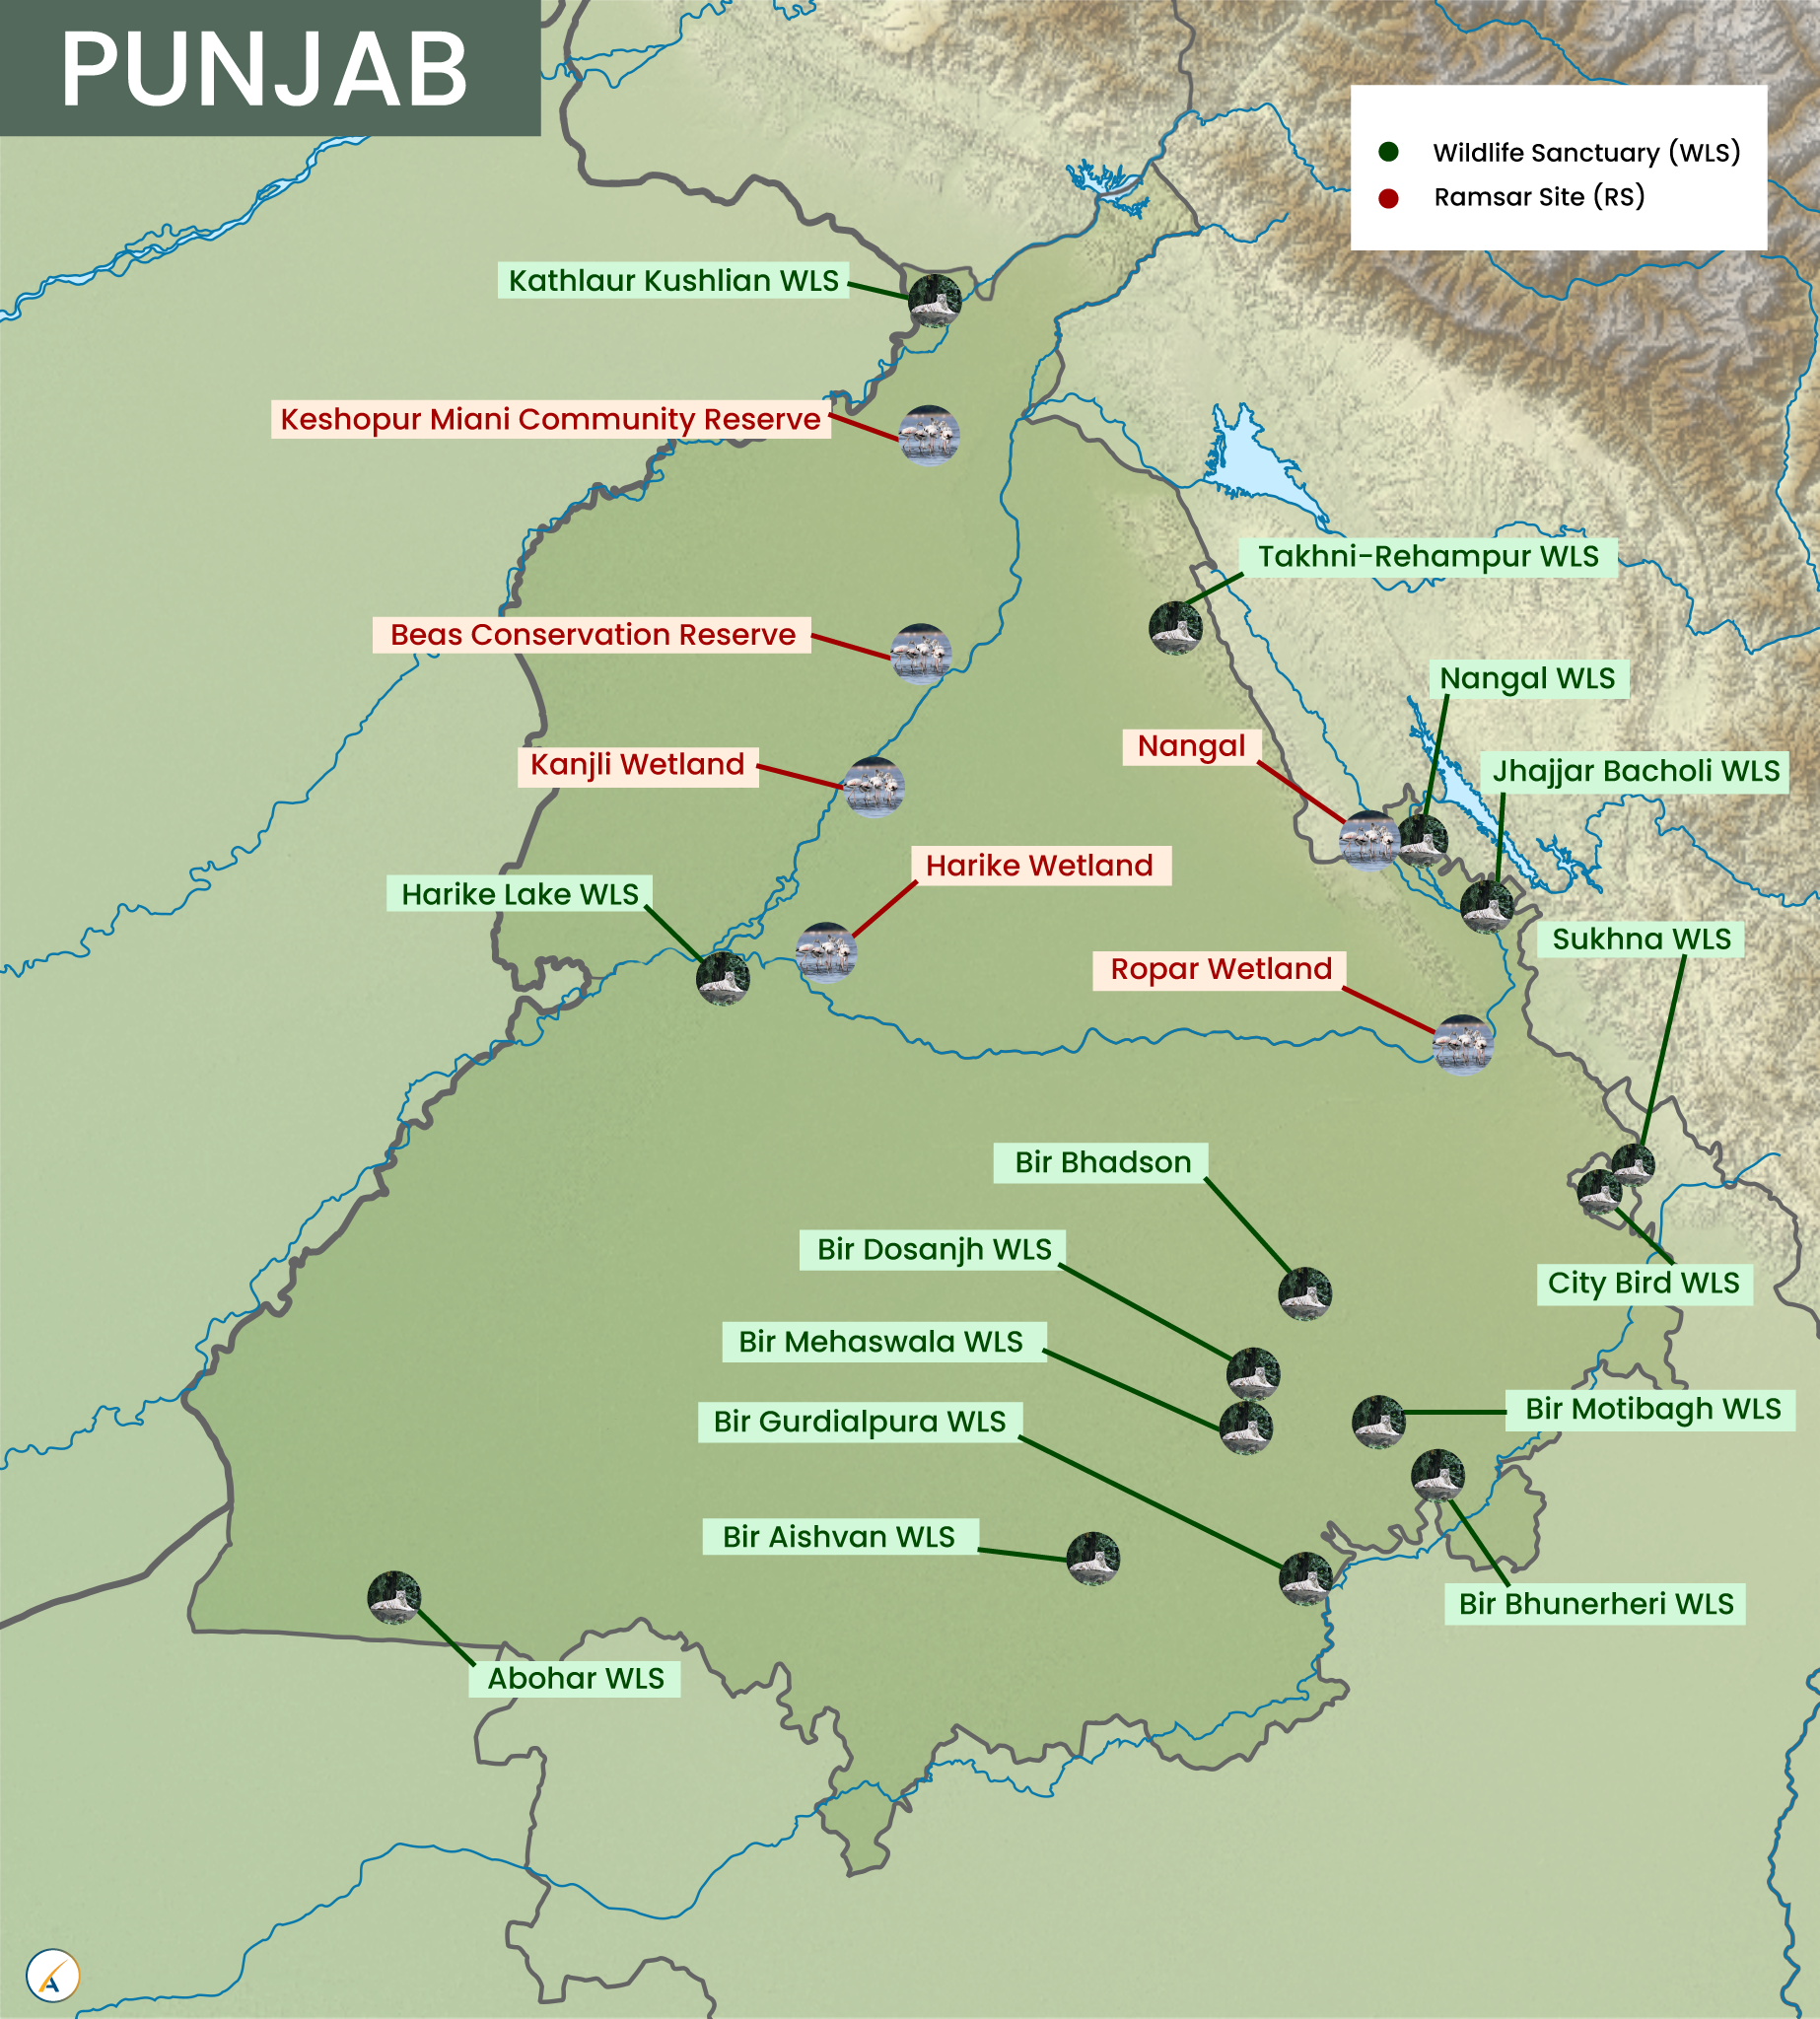 Punjab National Parks, Wildlife Sanctuaries & Ramsar Sites Map